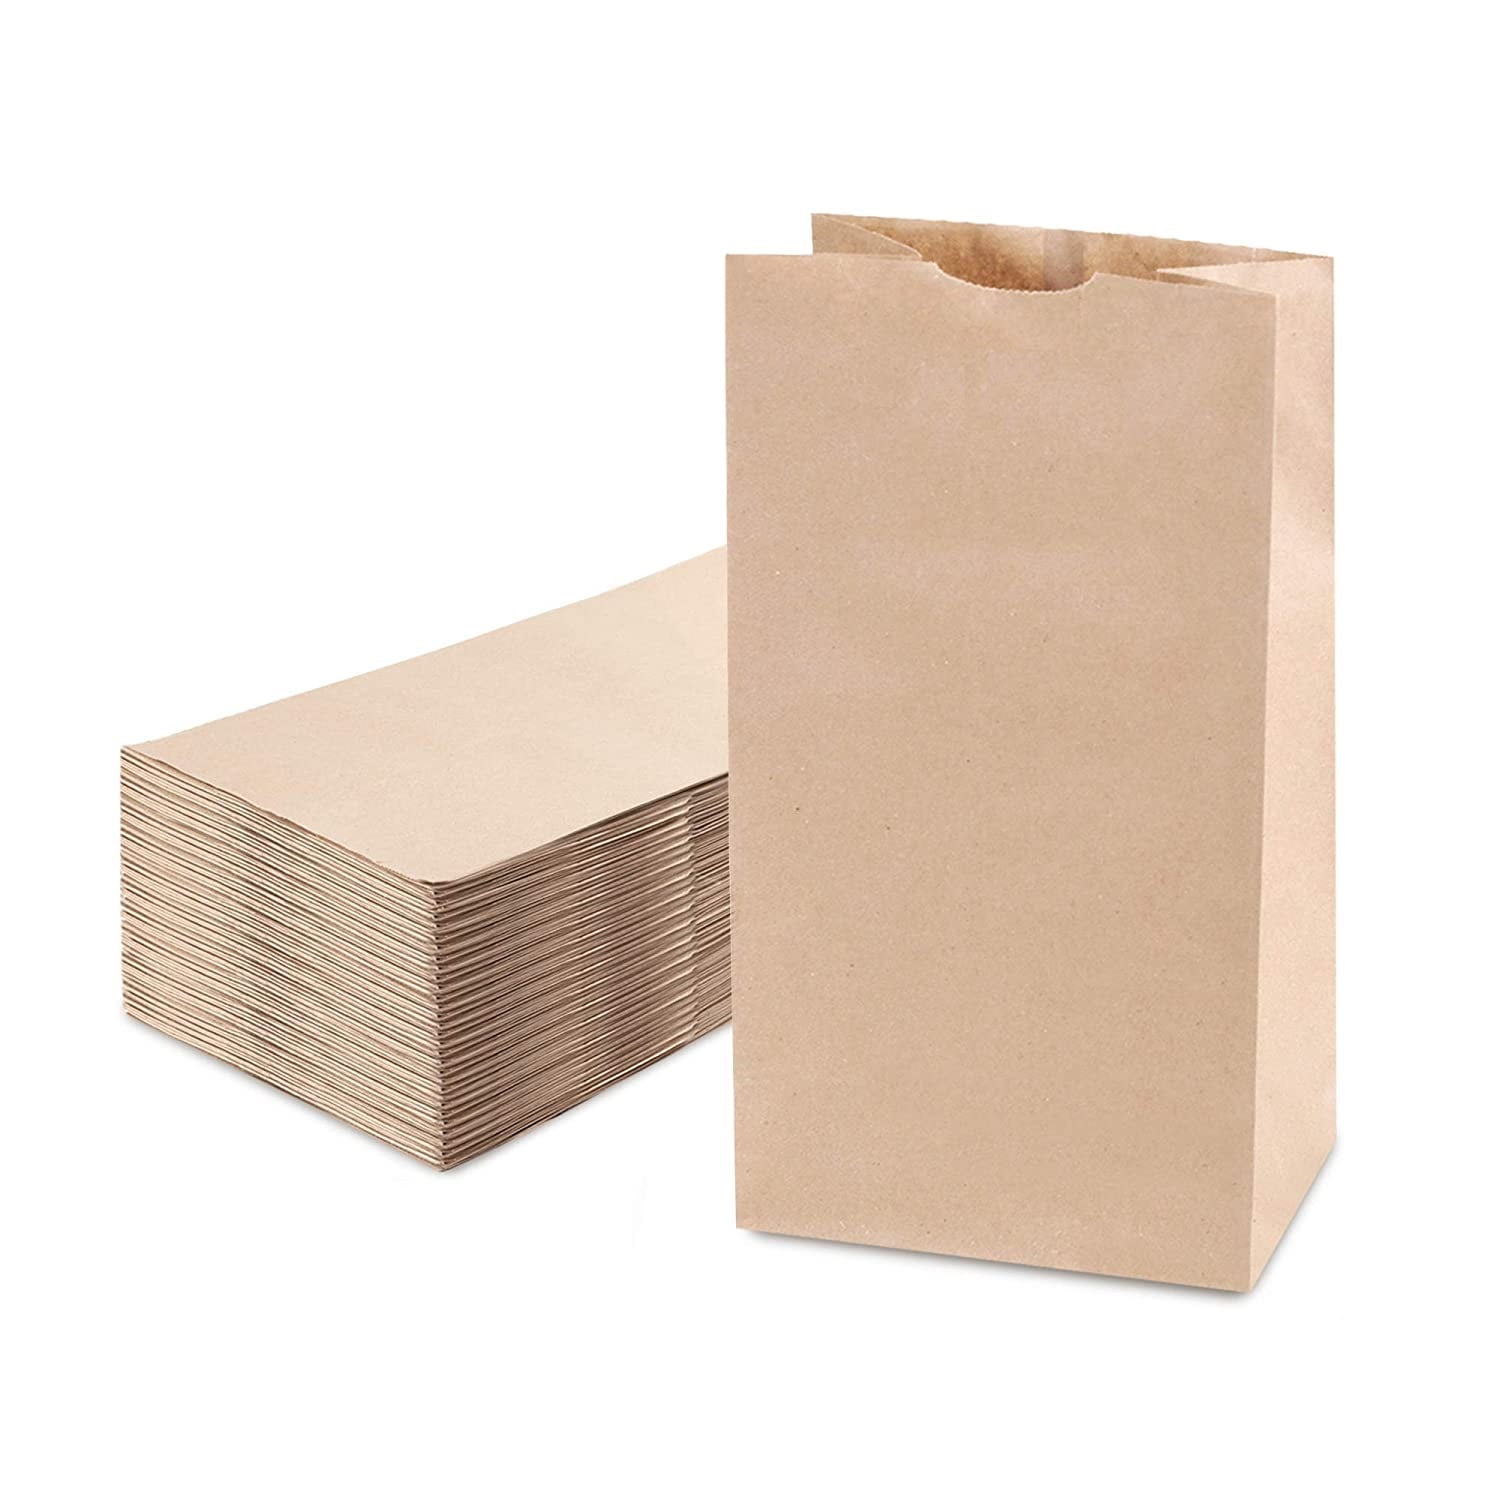 Restaurantware Bag Tek Kraft Paper French Fry / Snack Bag - 5 inch x 3 inch x 8 3/4 inch - 100 Count Box, Women's, Size: One size, Brown